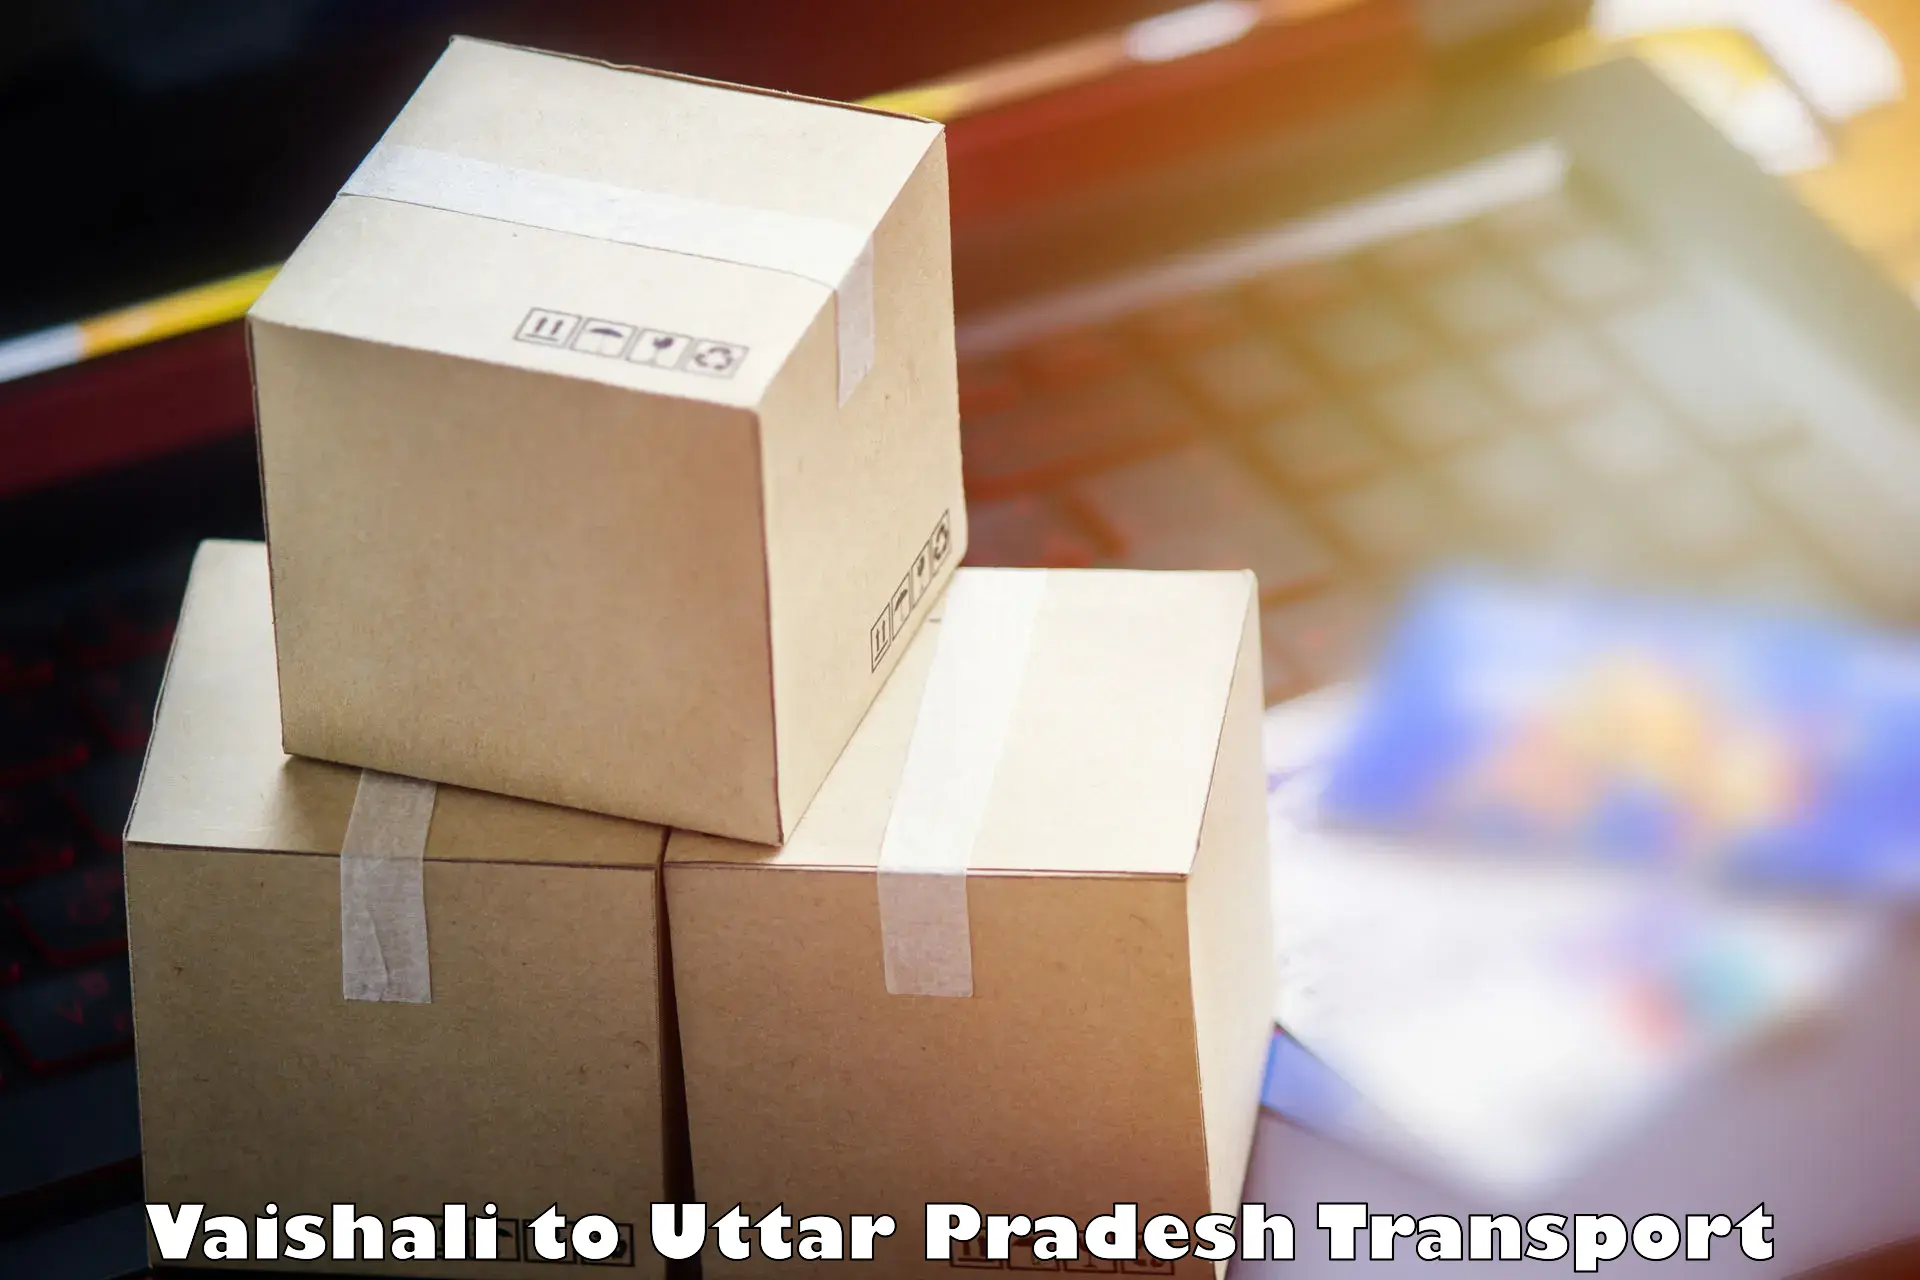 Pick up transport service Vaishali to Agra